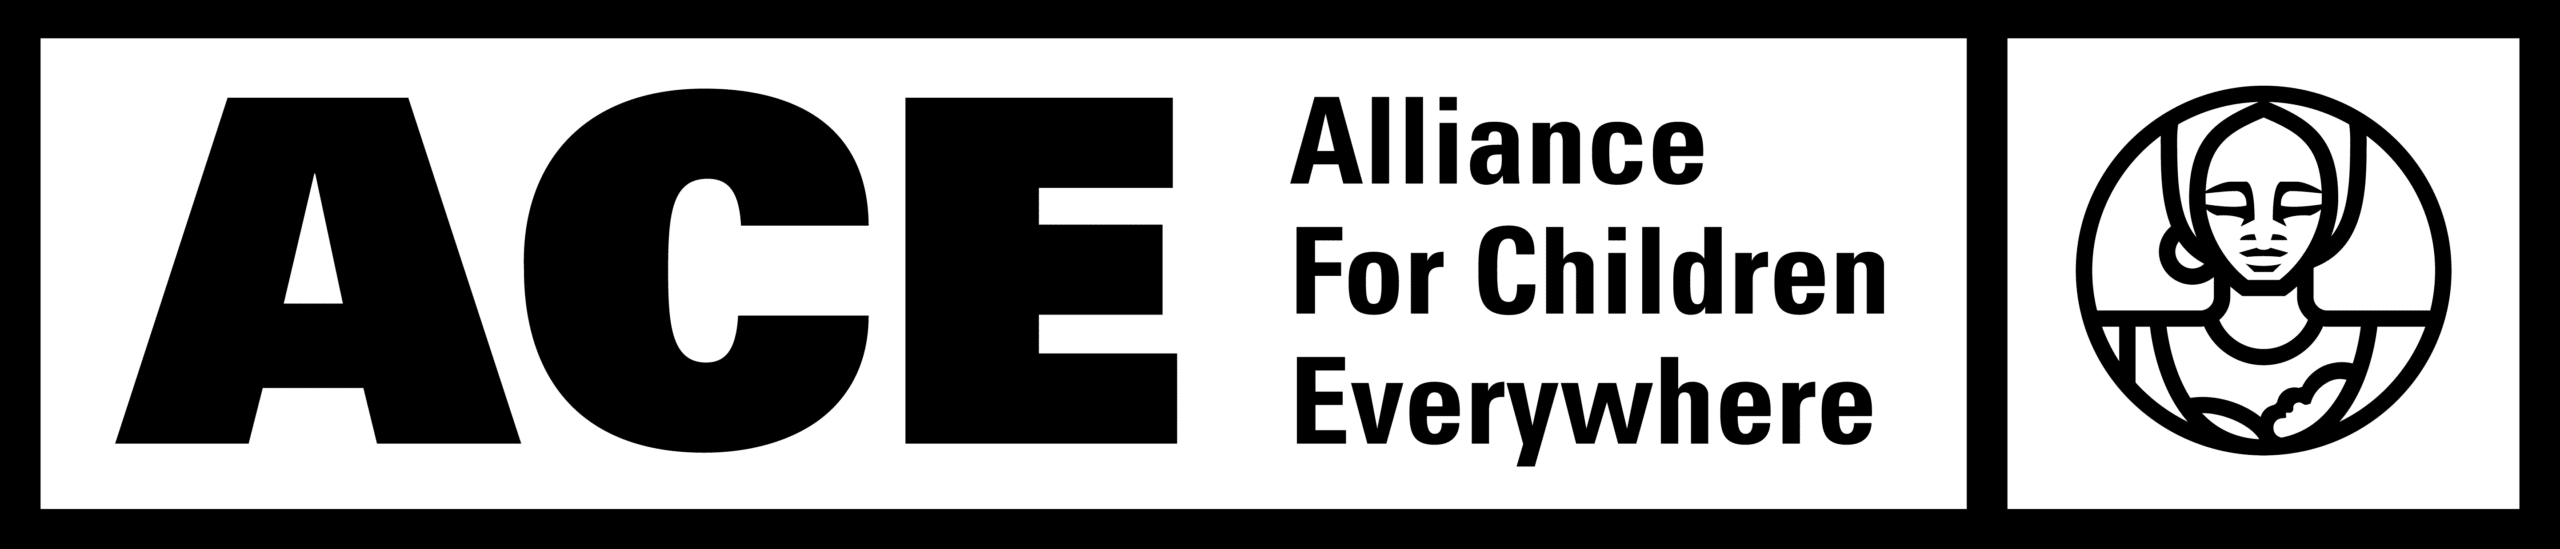 Alliance for Children Everywhere